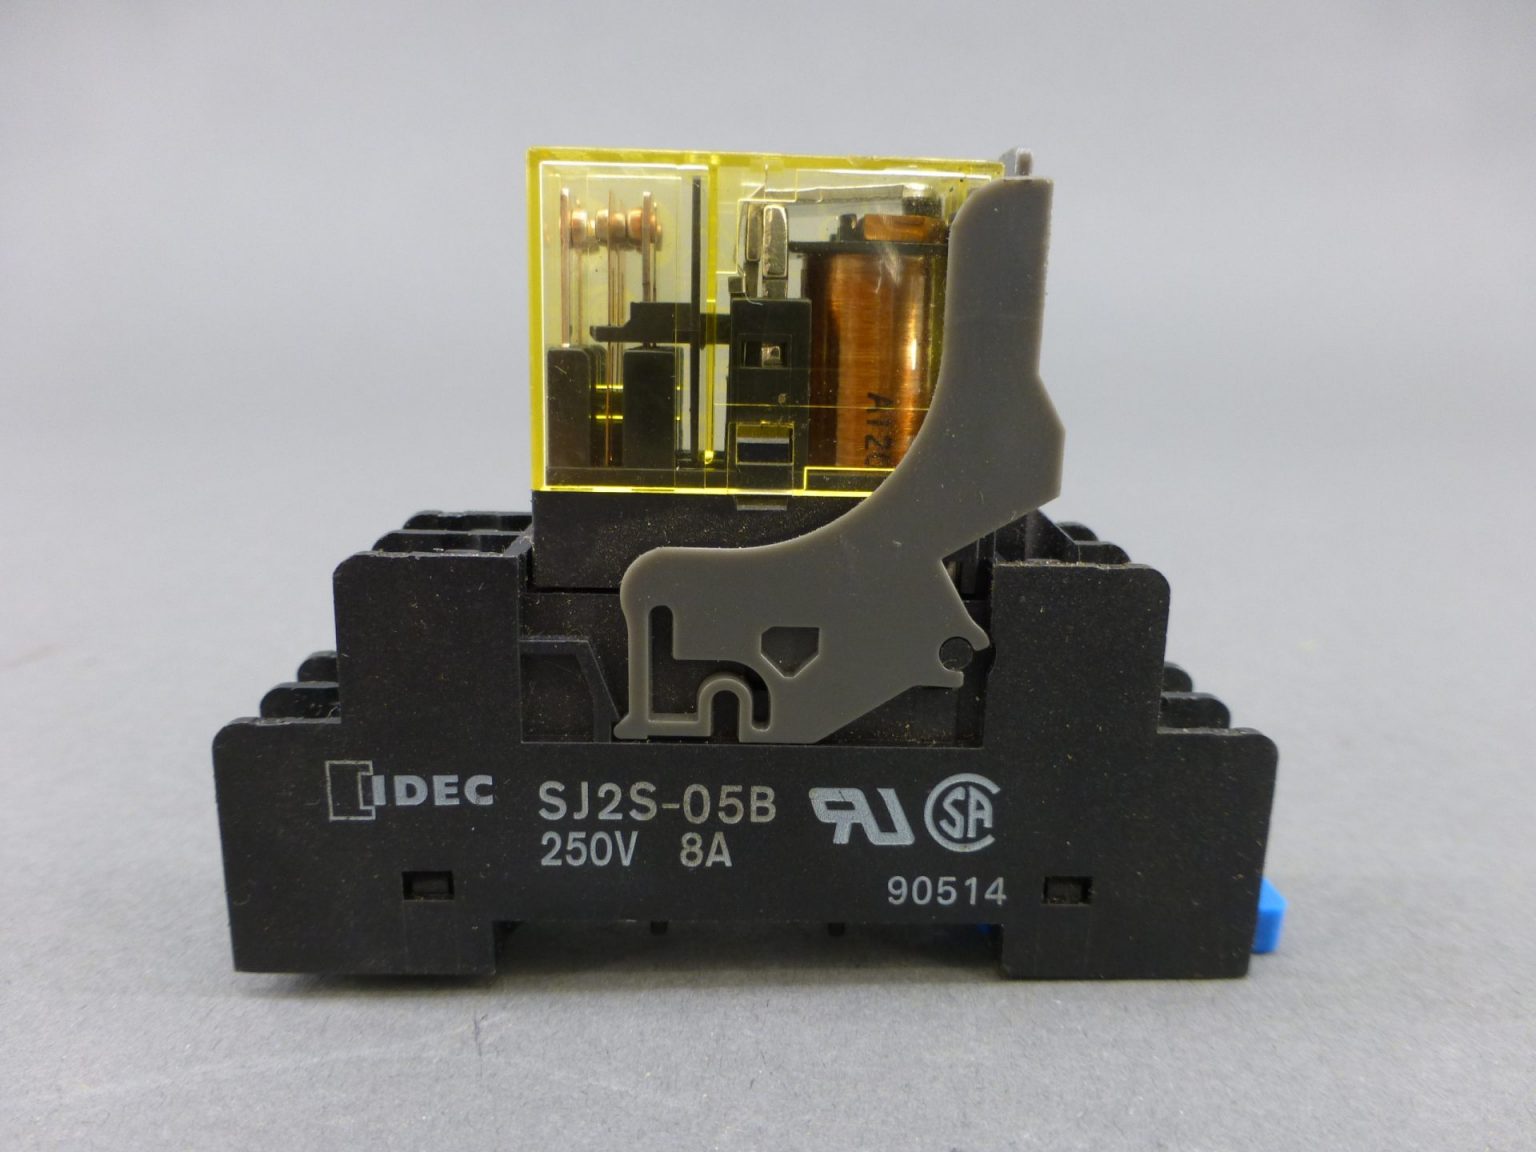 Idec SJ2S-05B Relay Socket, 250V, 8A – GPM Surplus